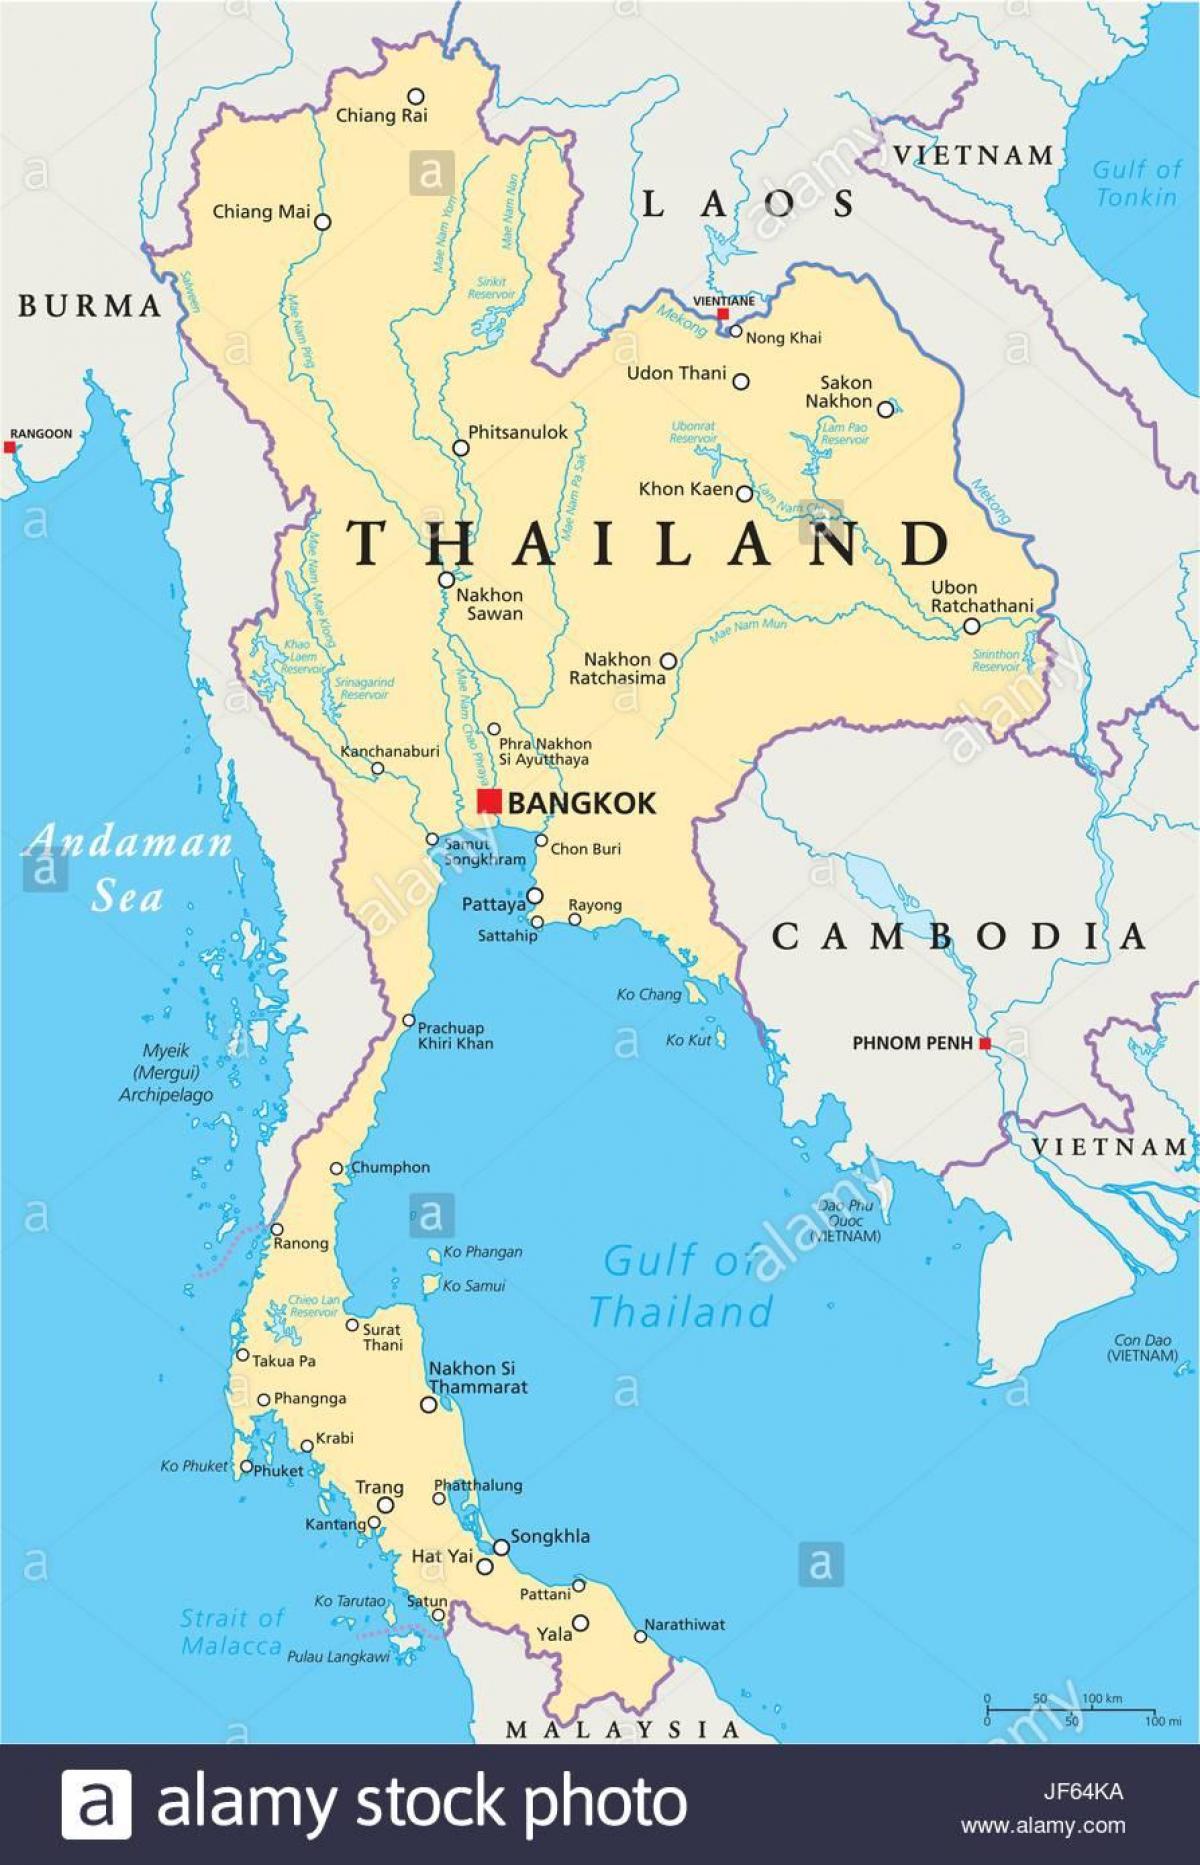 bangkok on a world map